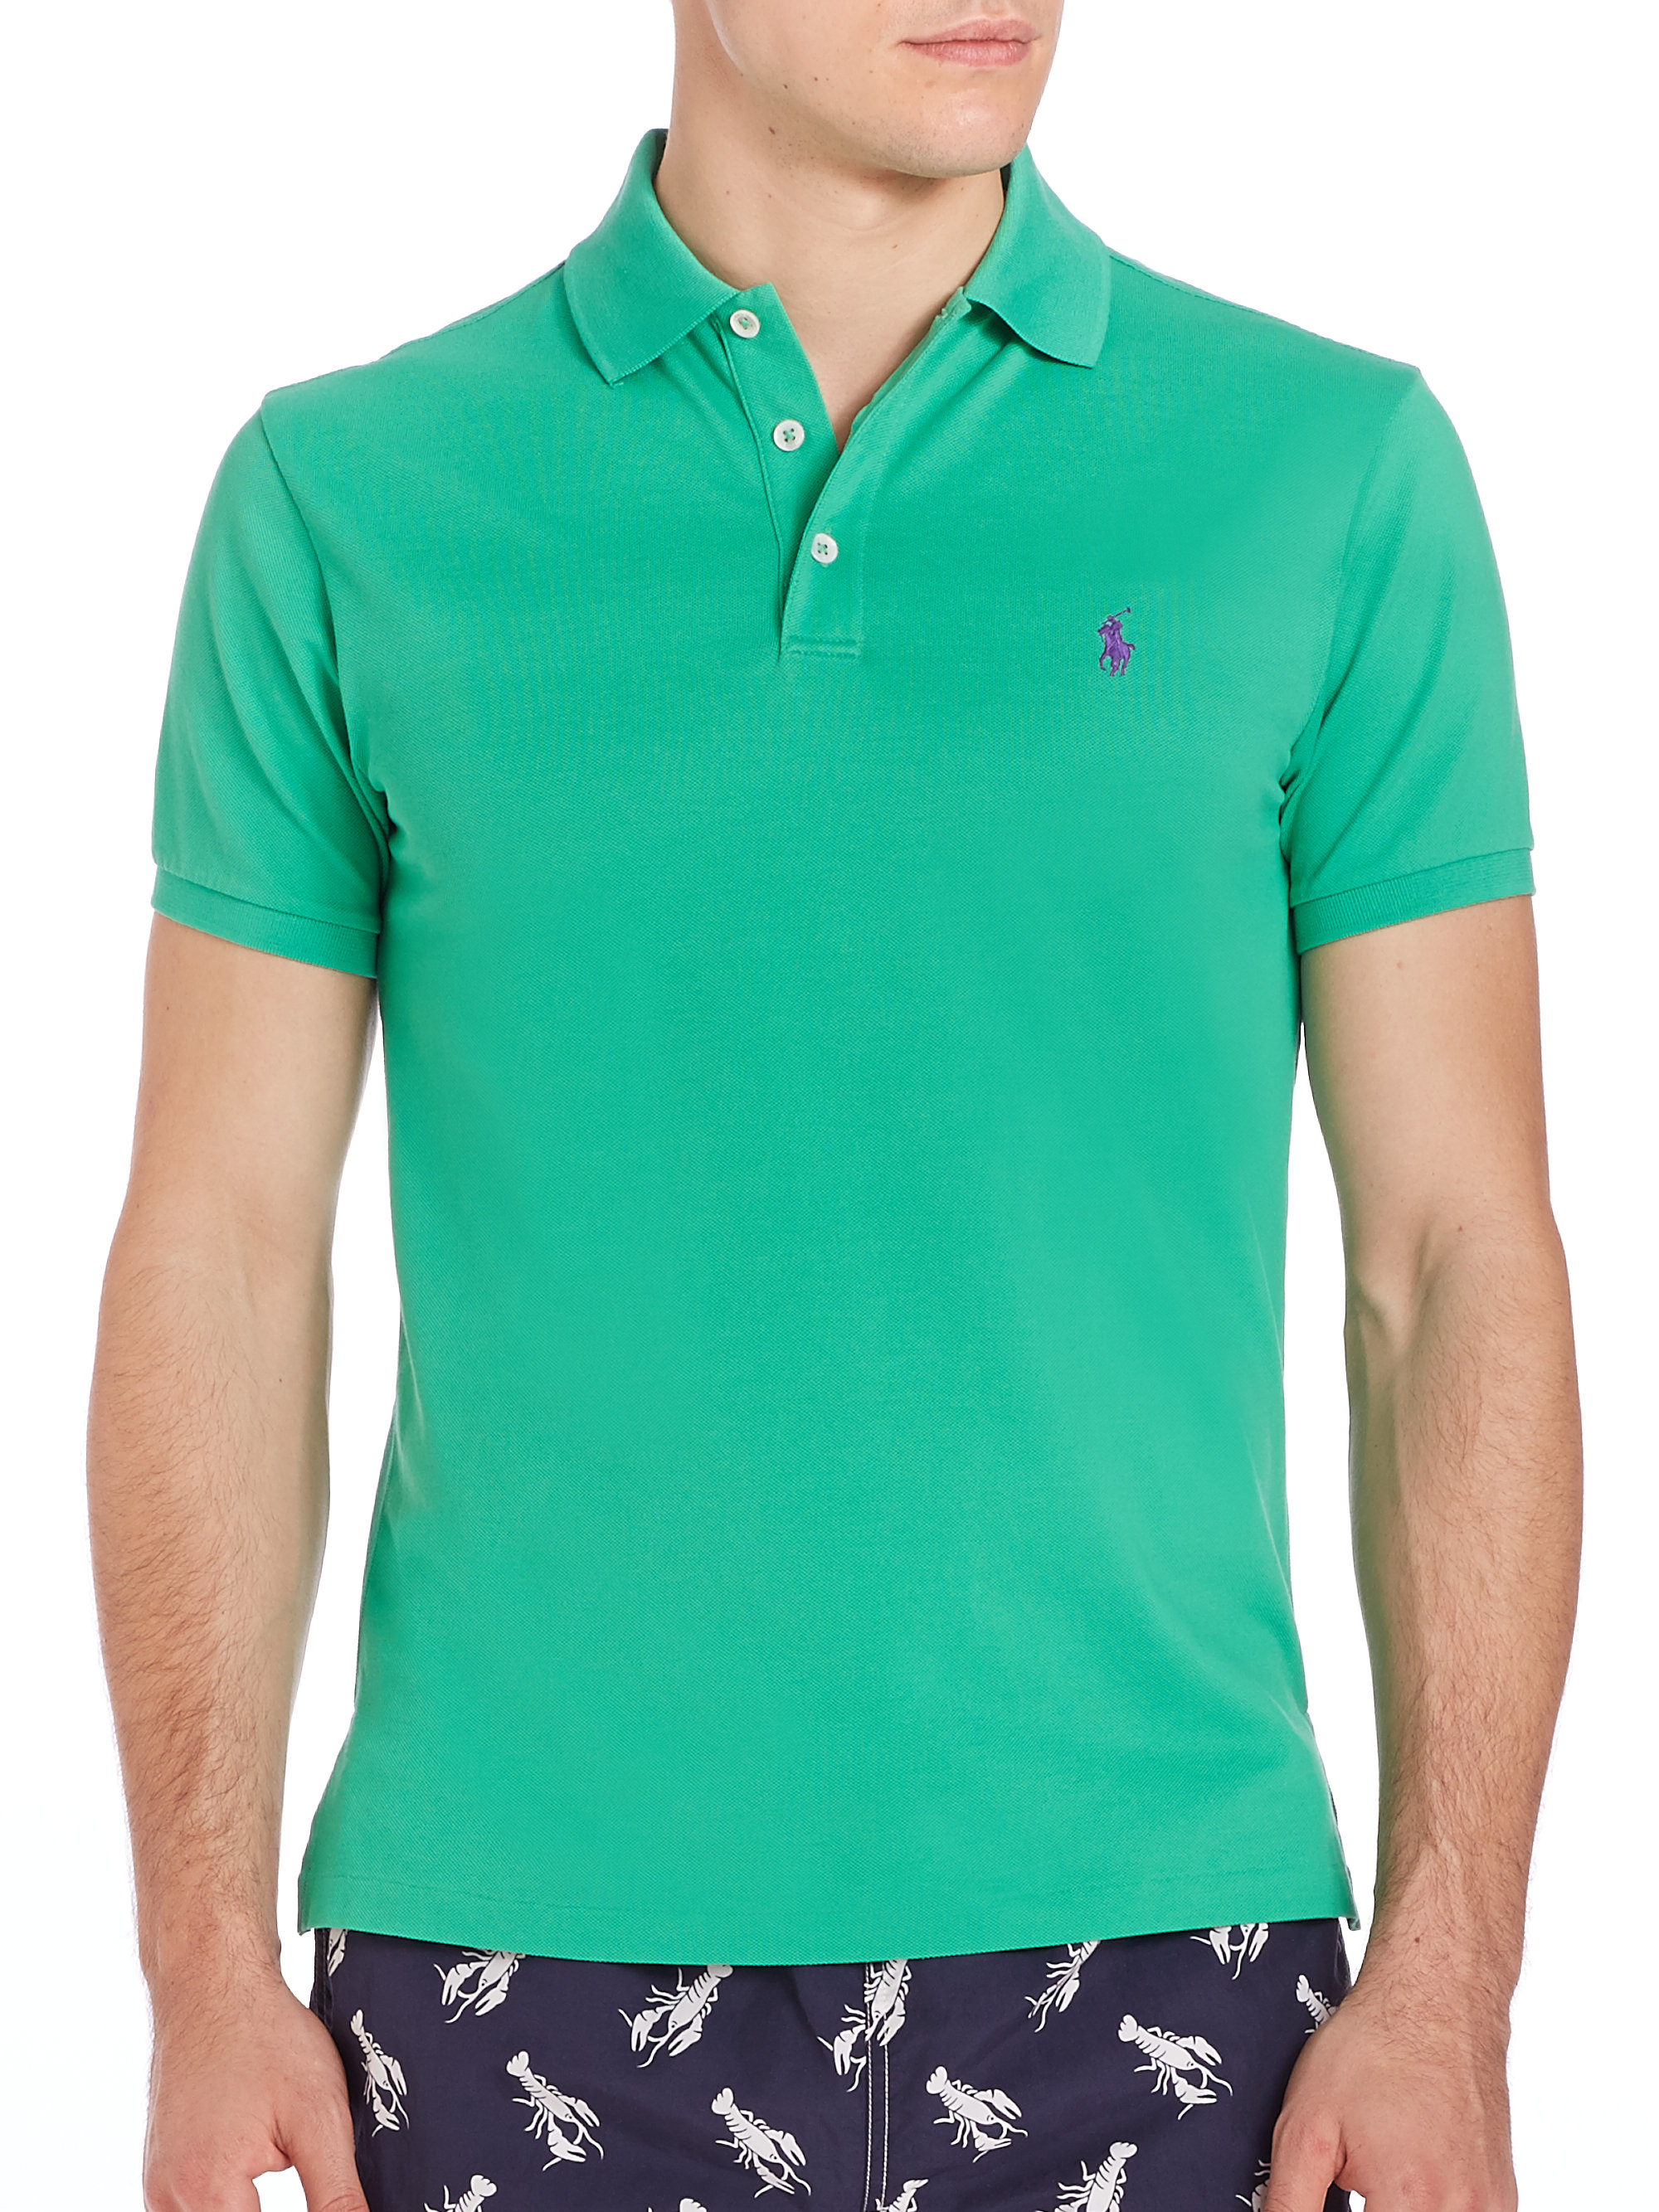 Lyst - Polo Ralph Lauren Pima Cotton Polo Shirt in Green for Men